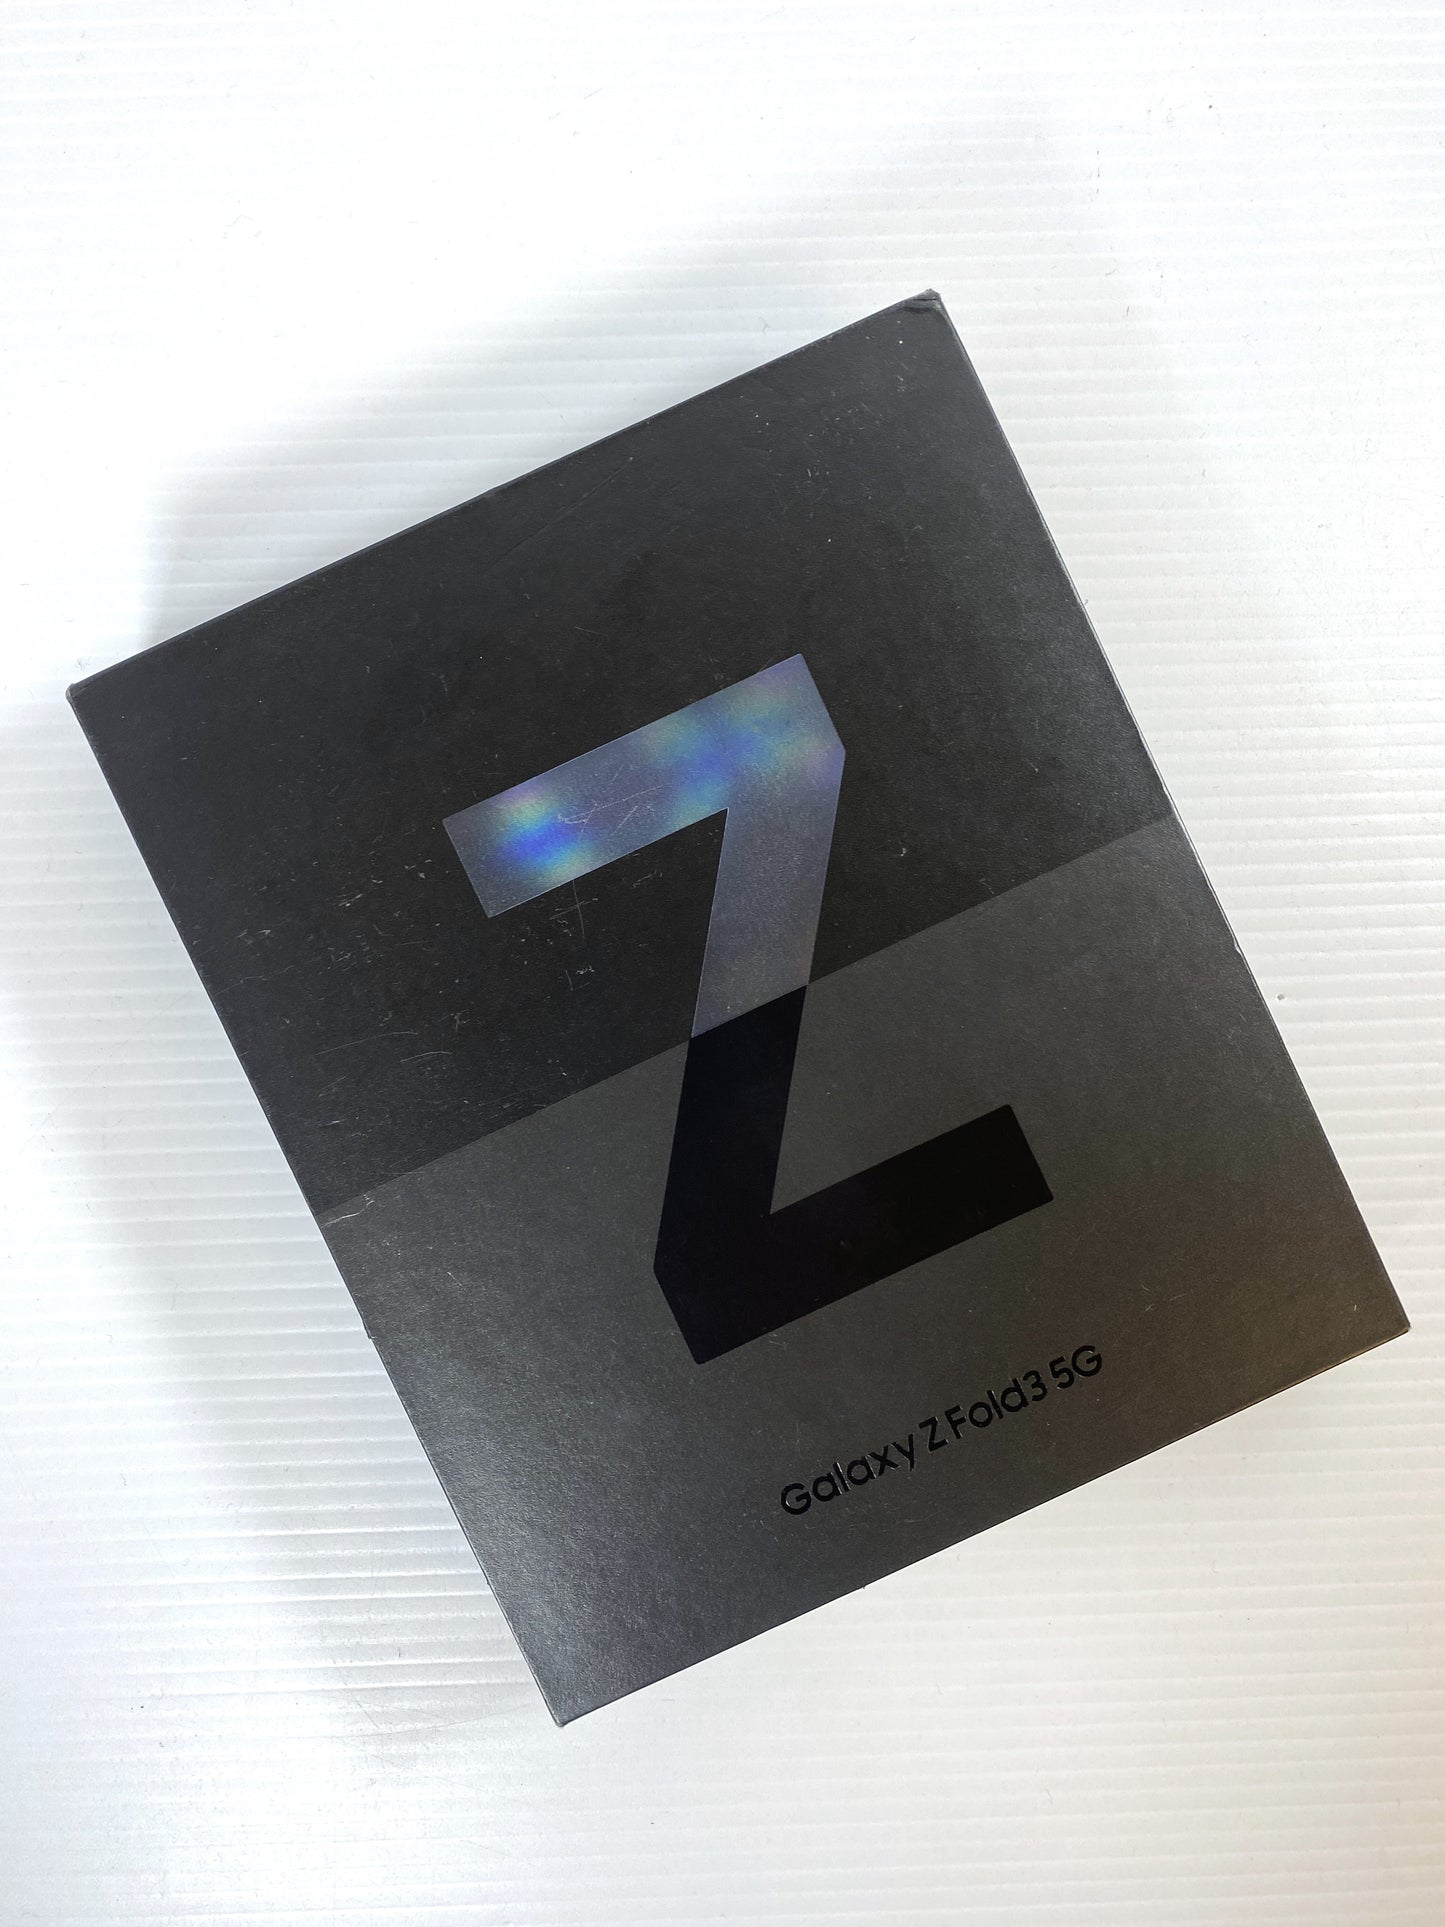 Samsung Z Fold 3